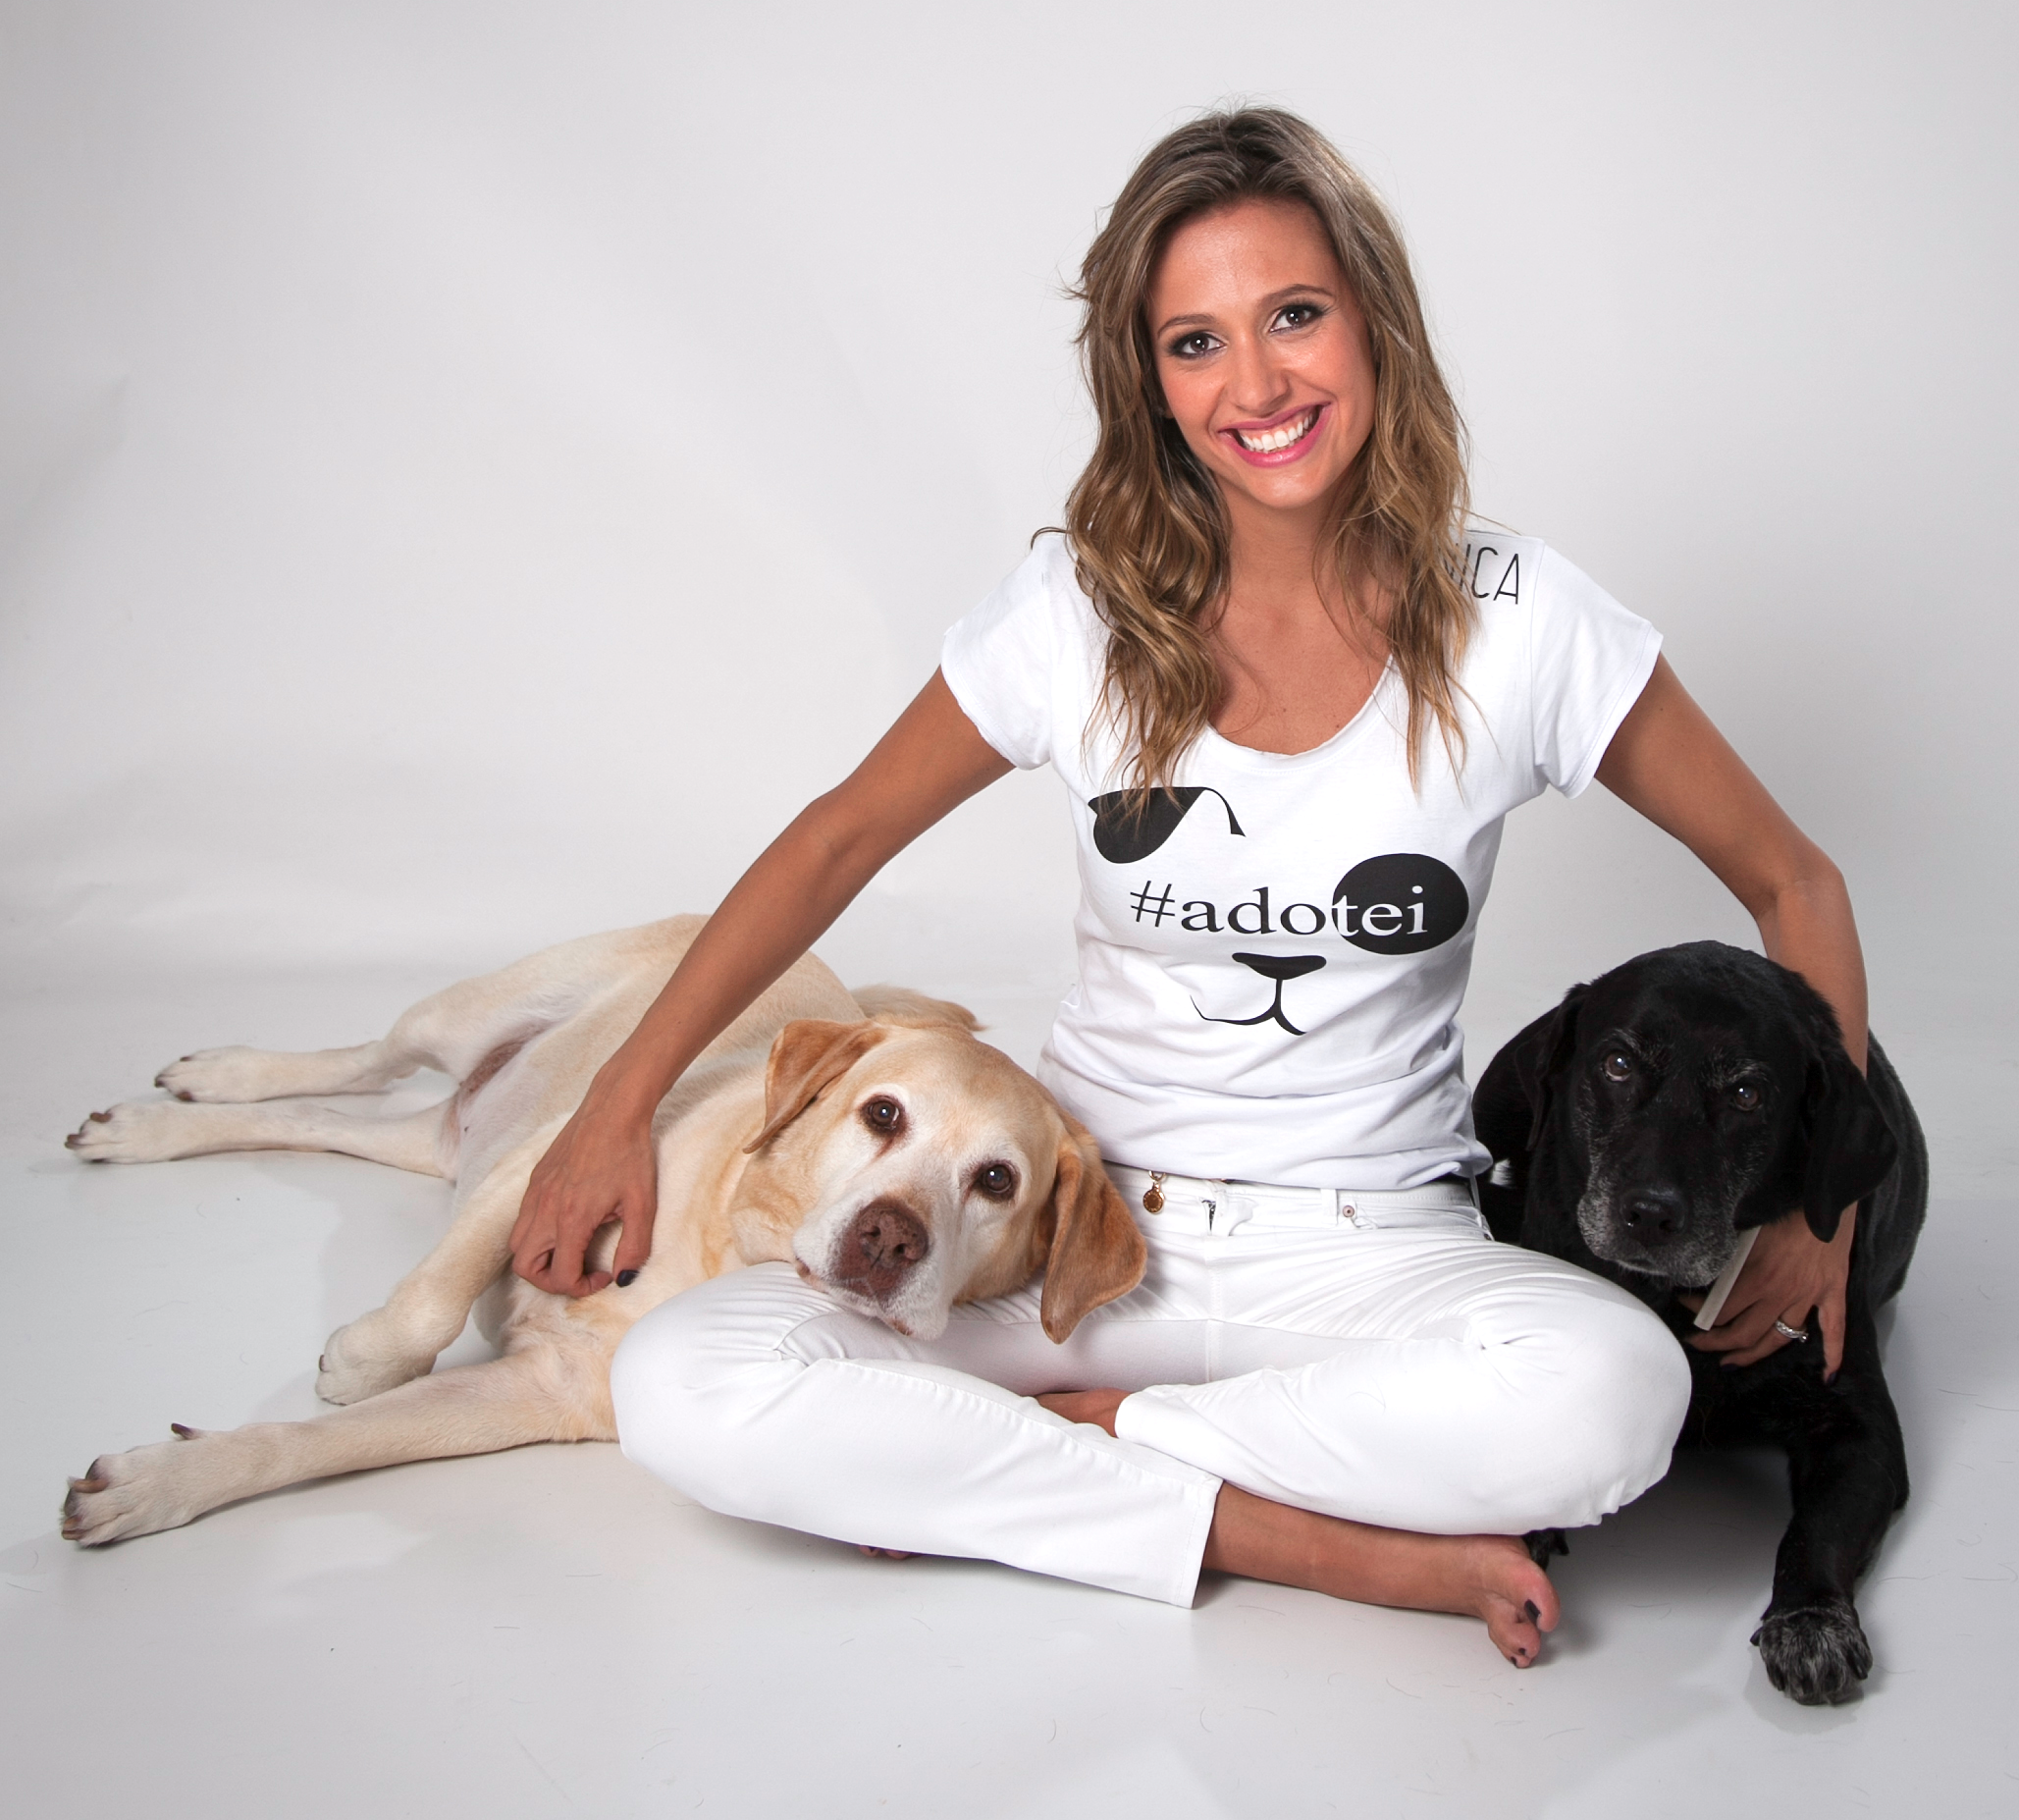 Luisa Mell derruba campanha que faz apologia a maus tratos de animais |  VEJA RIO